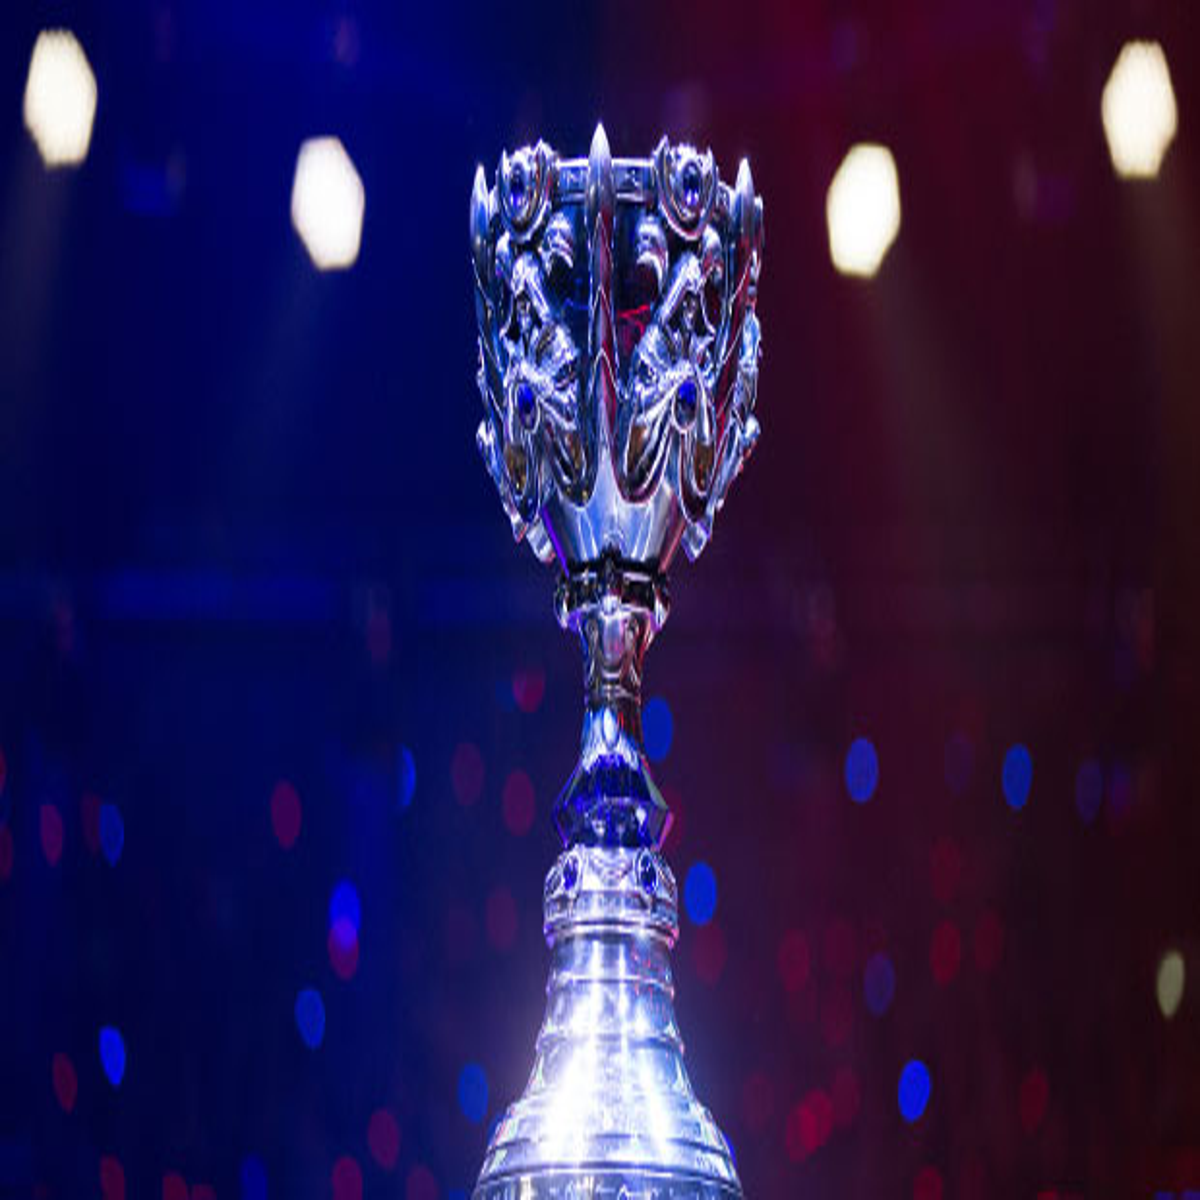 Summoner's Cup, League of Legends Wiki